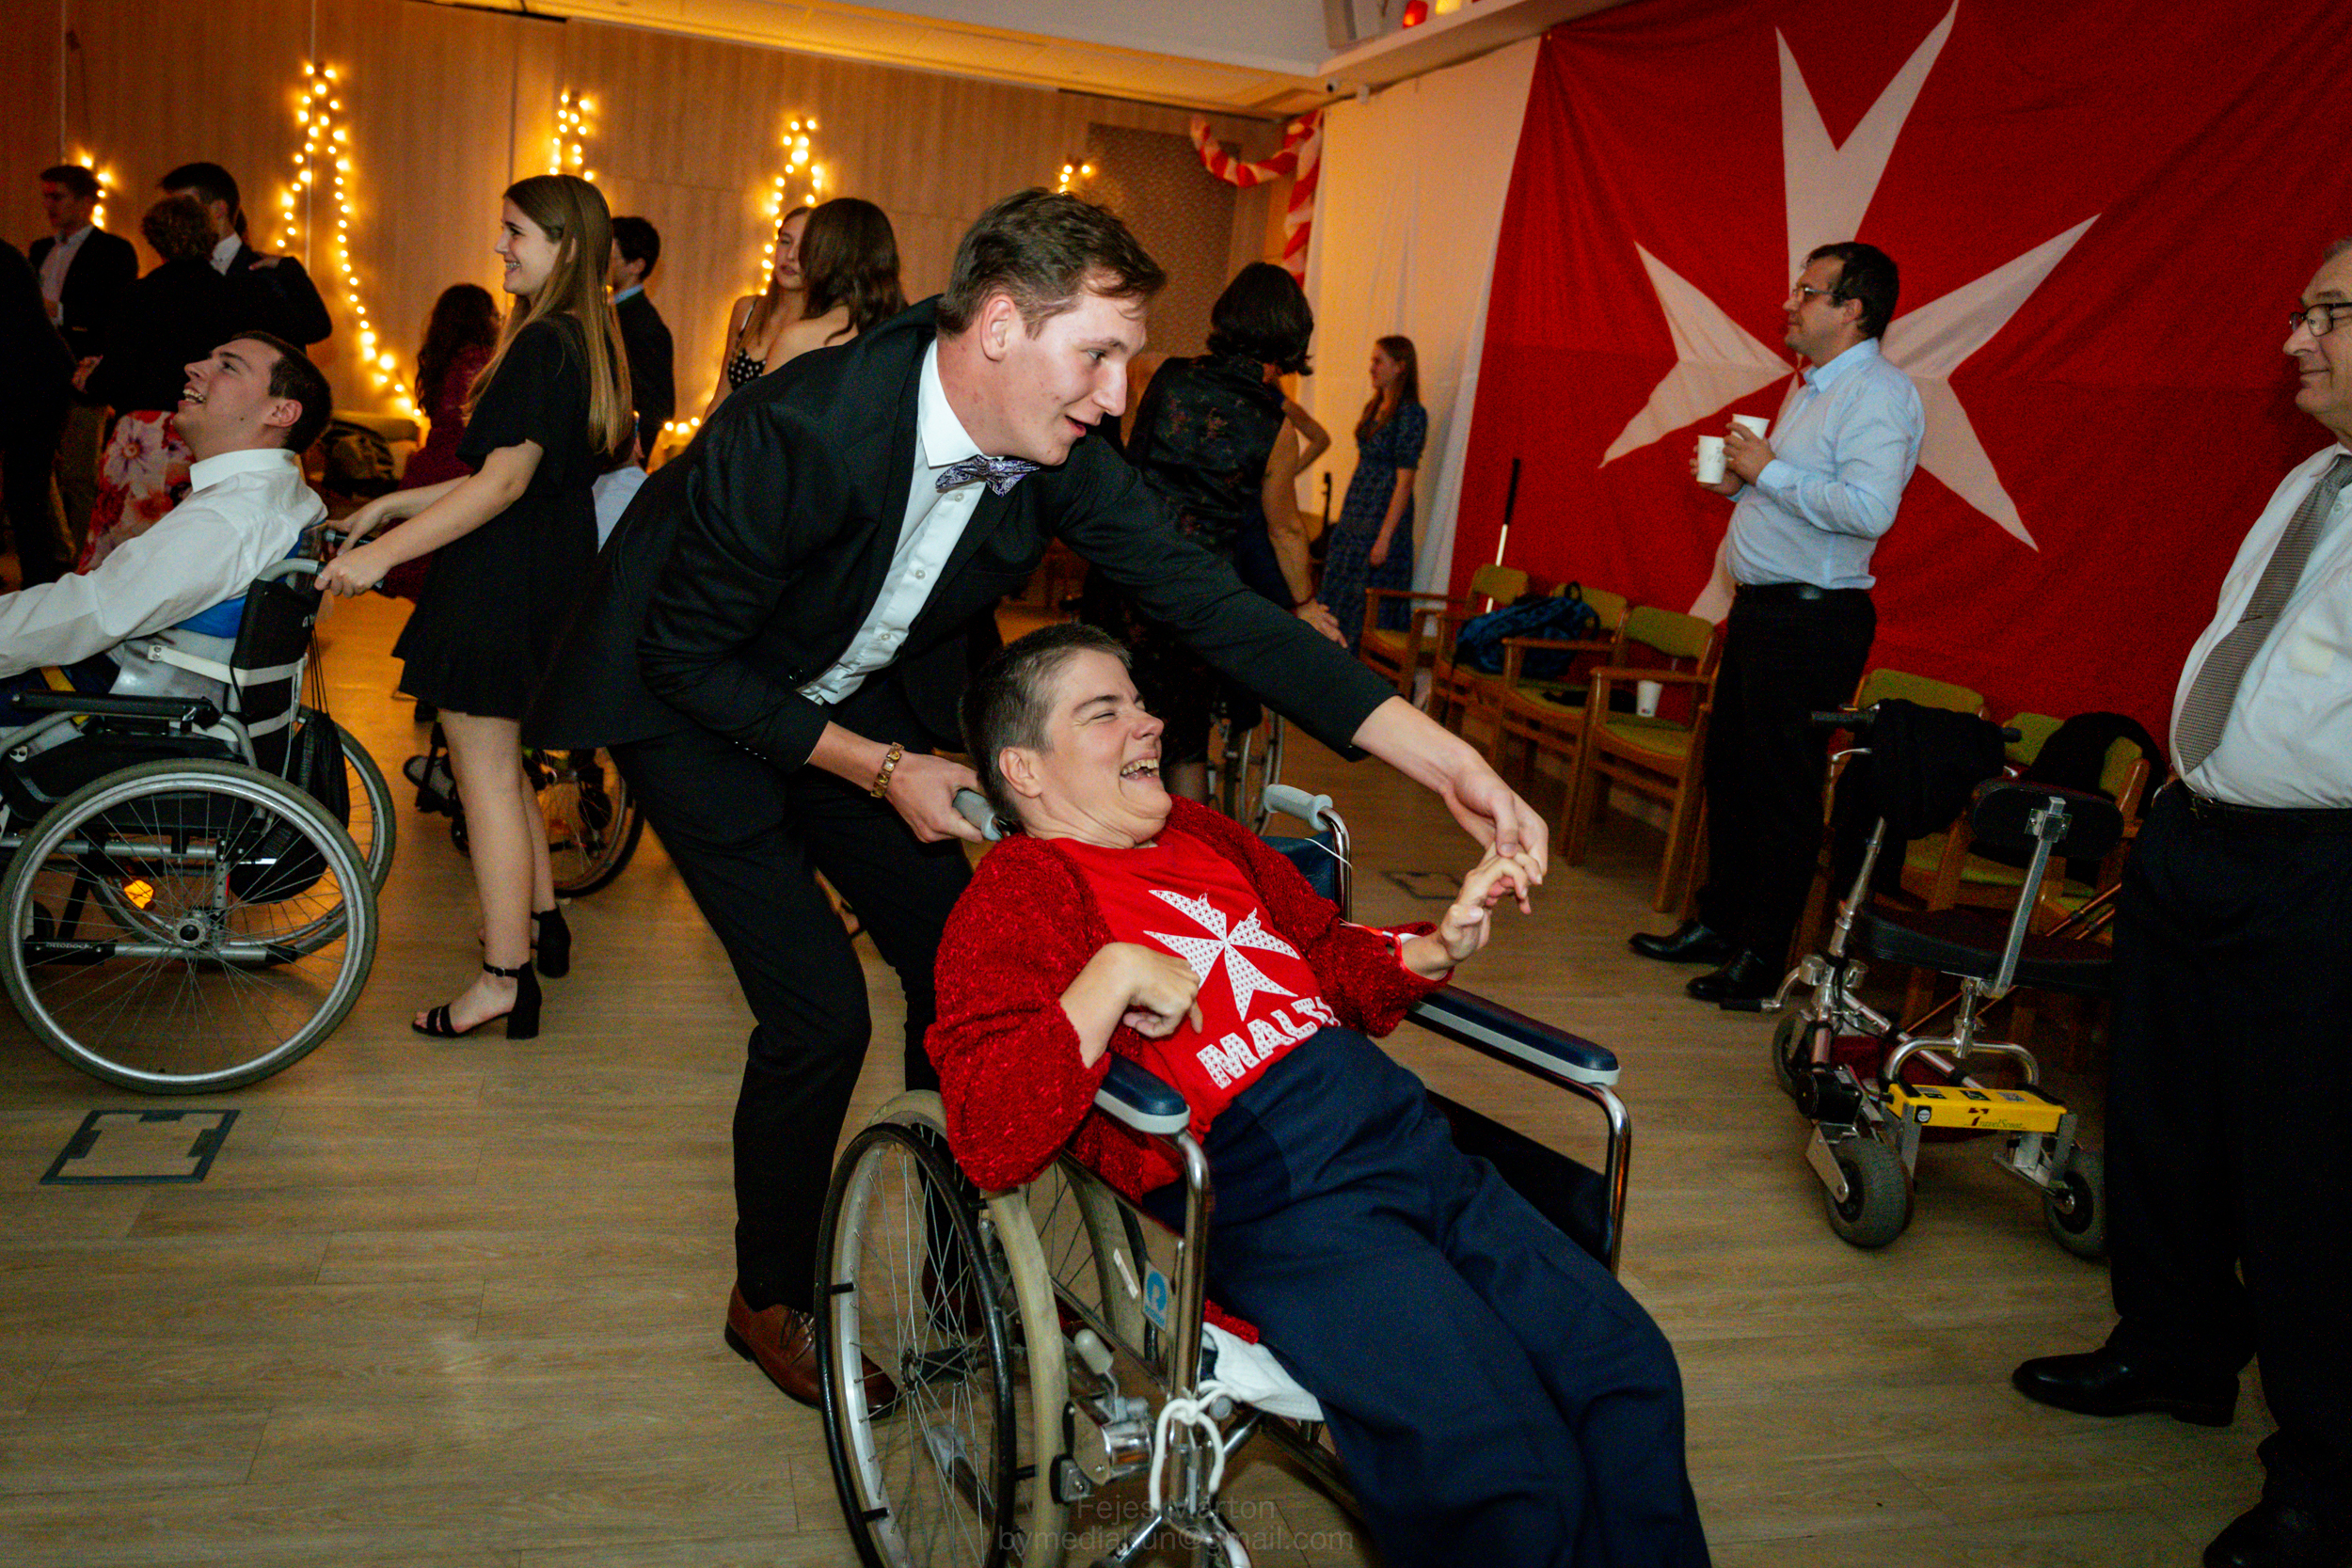 In a wheelchair on the dance floor